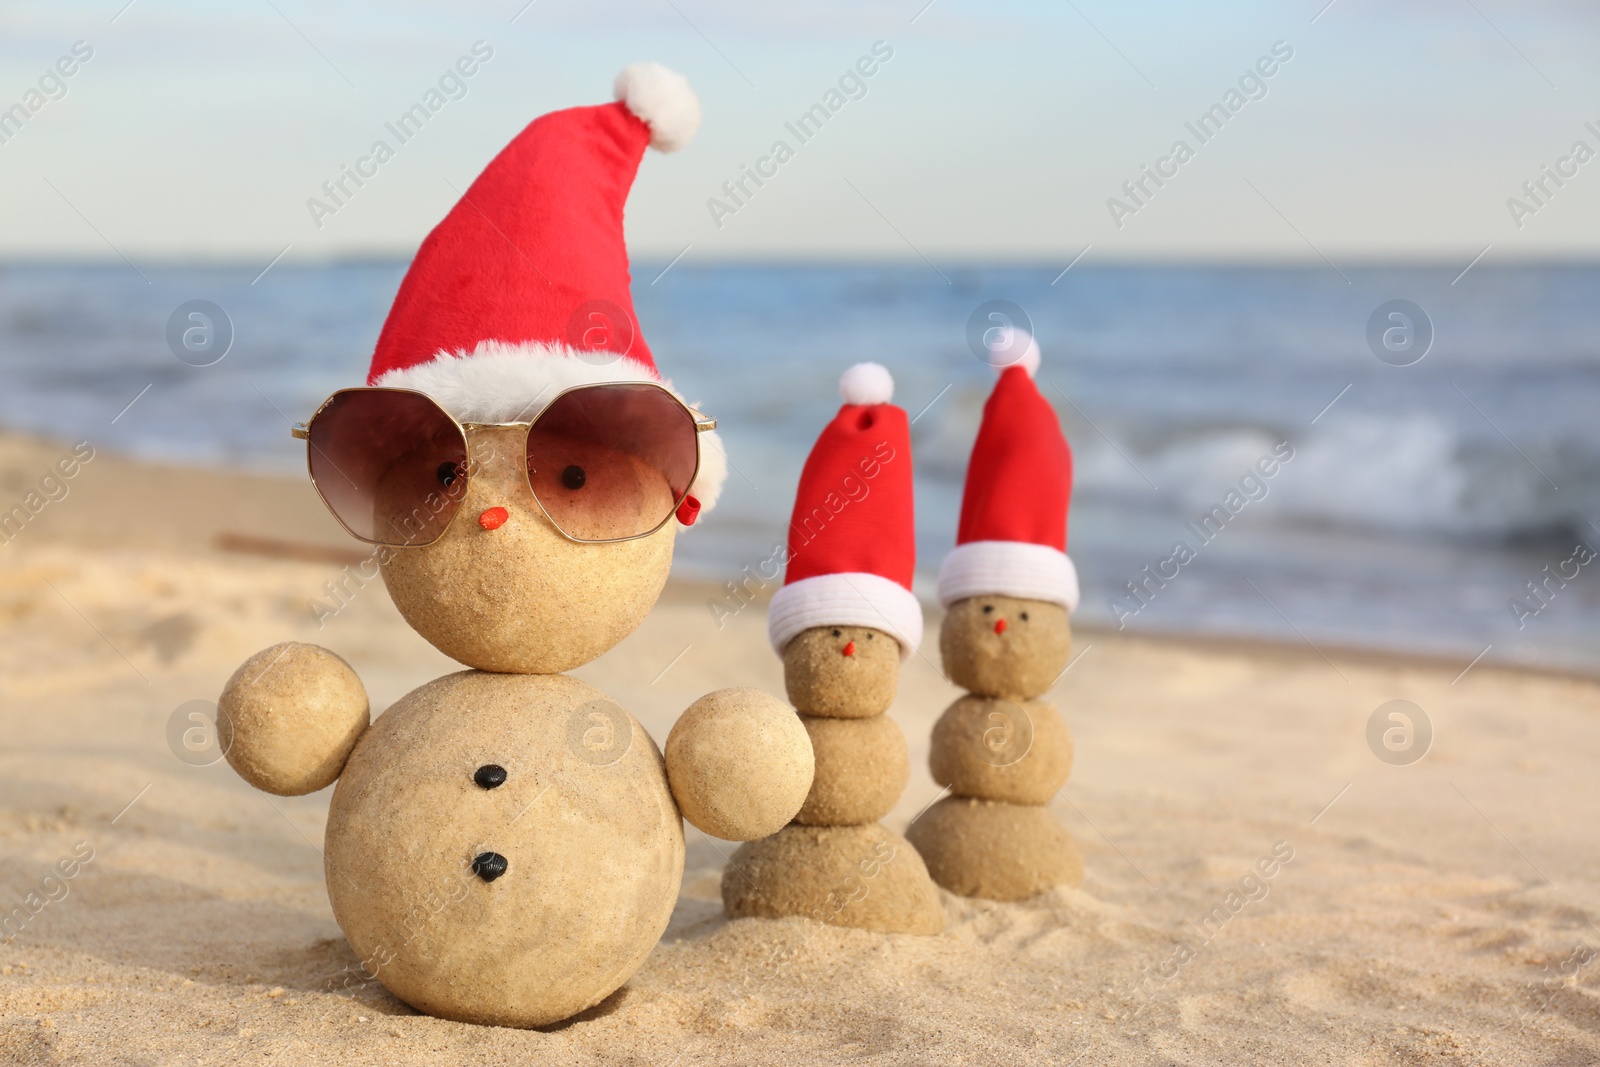 Photo of Snowmen made of sand with Santa hats and sunglasses on beach near sea. Christmas vacation